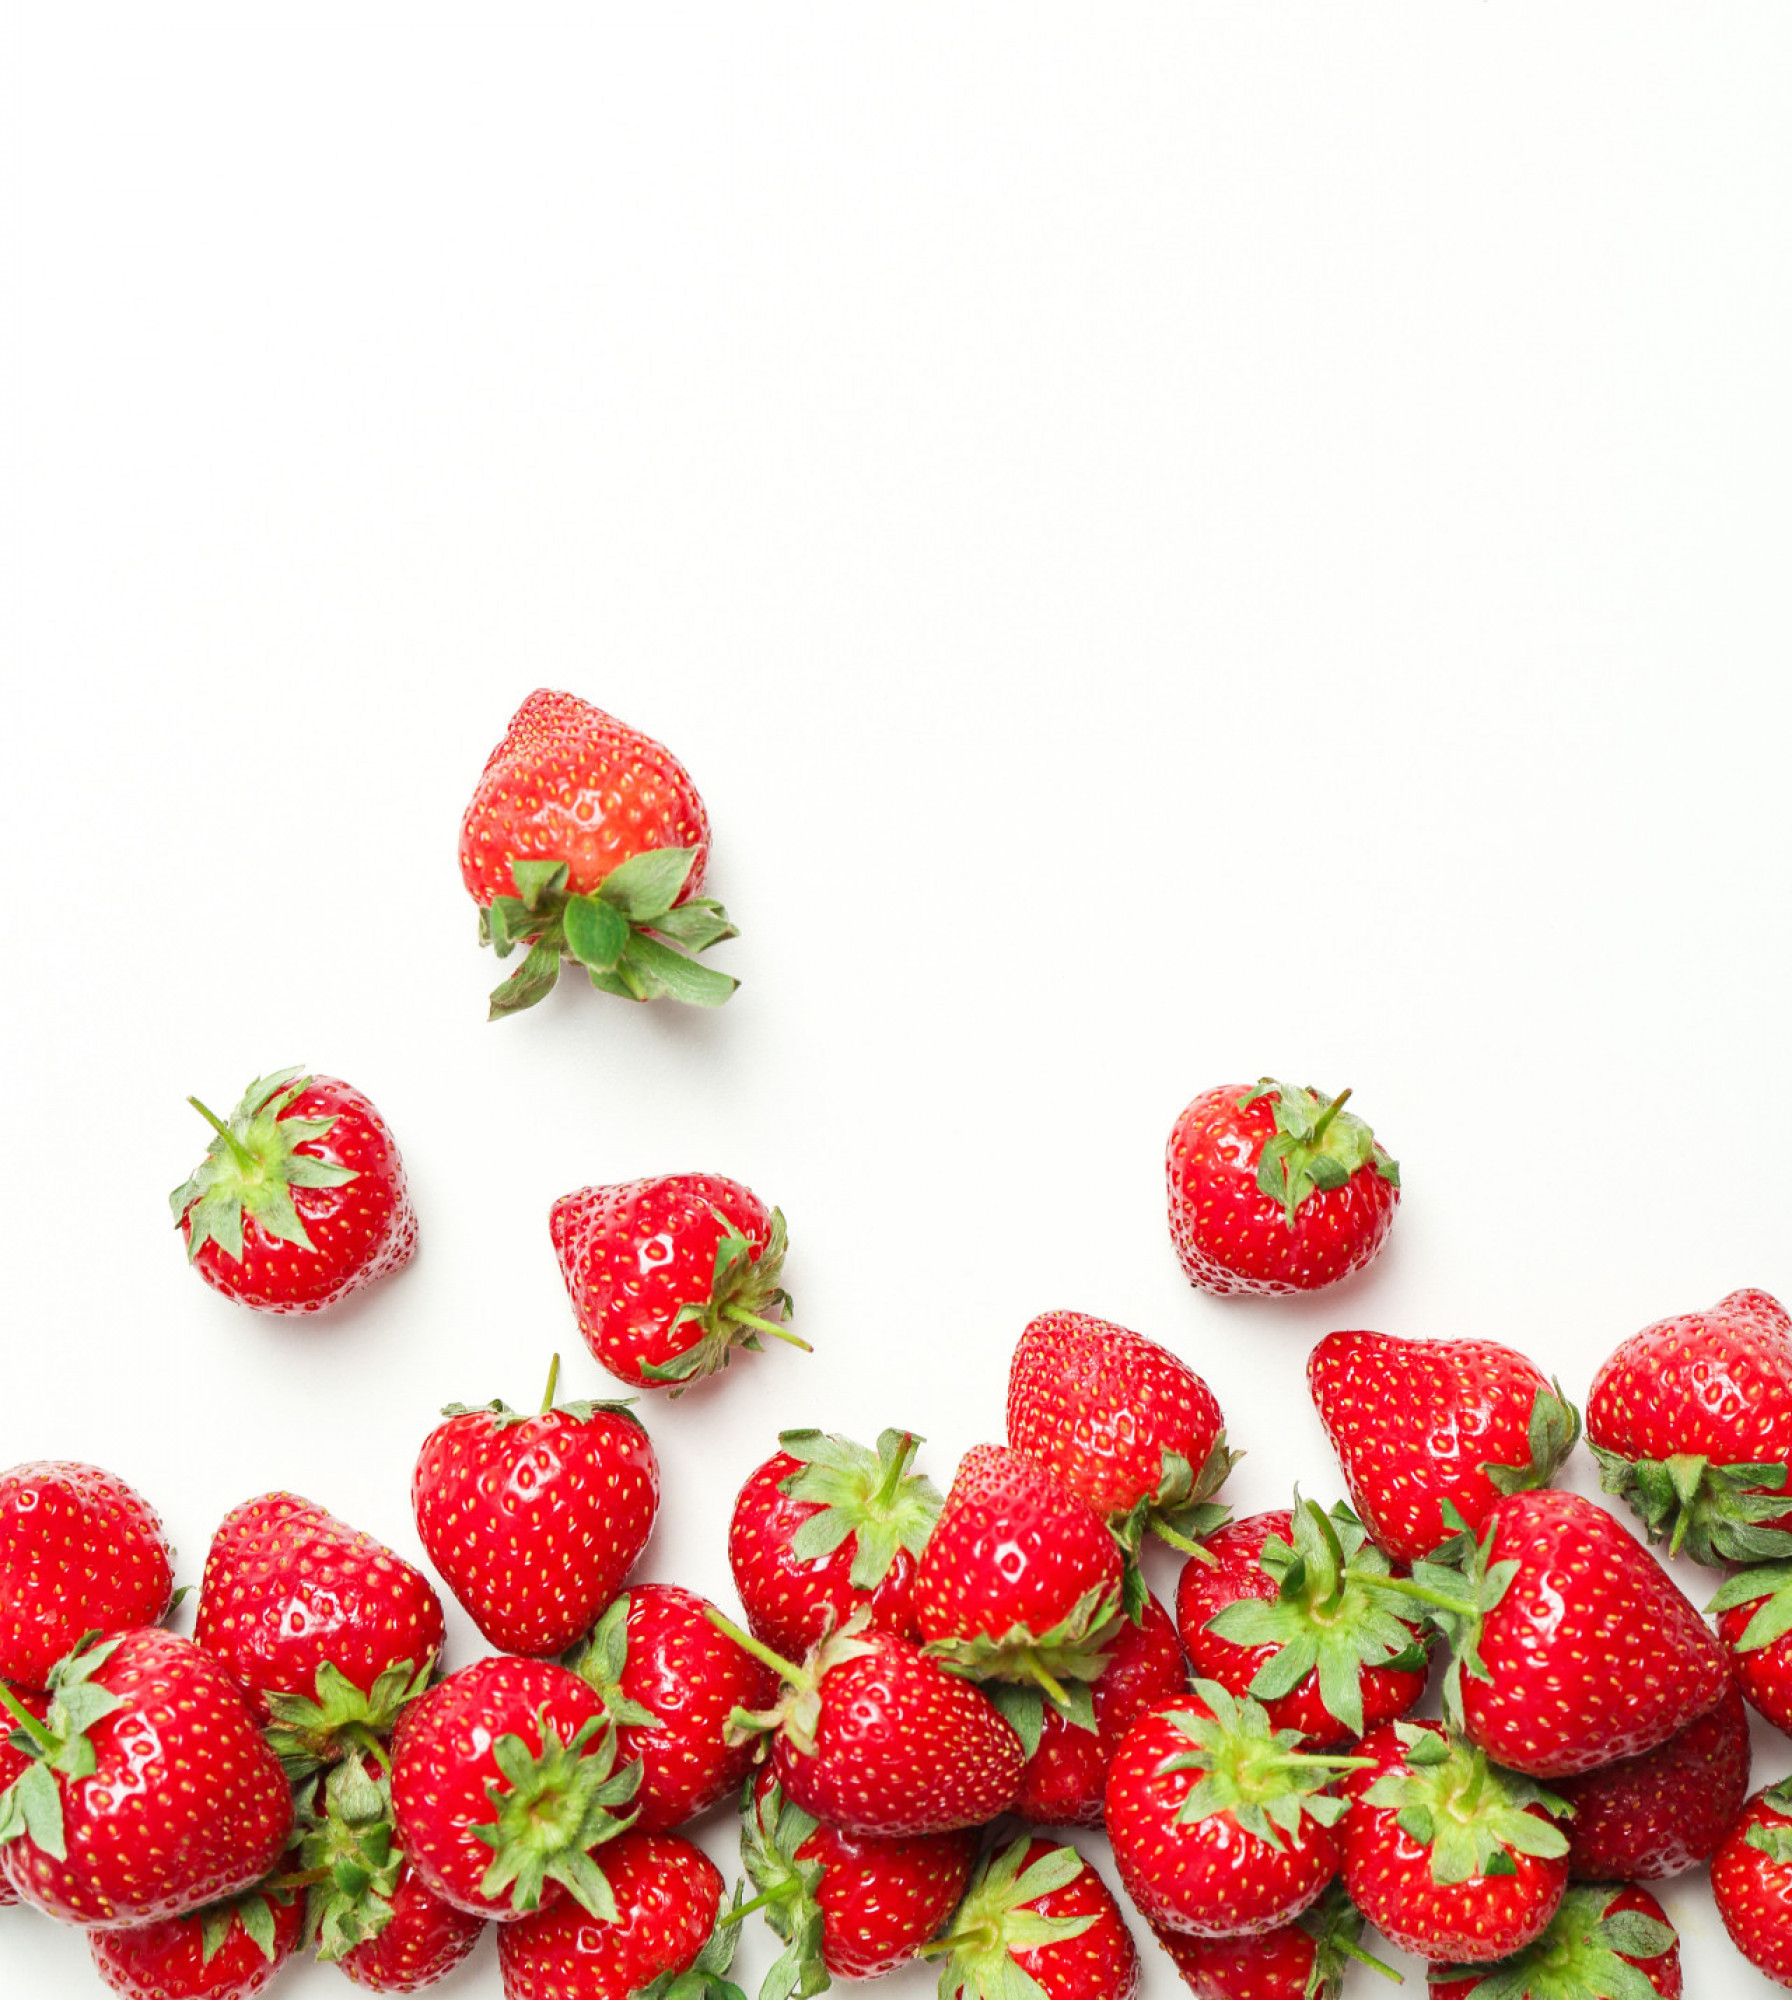 The world of strawberries